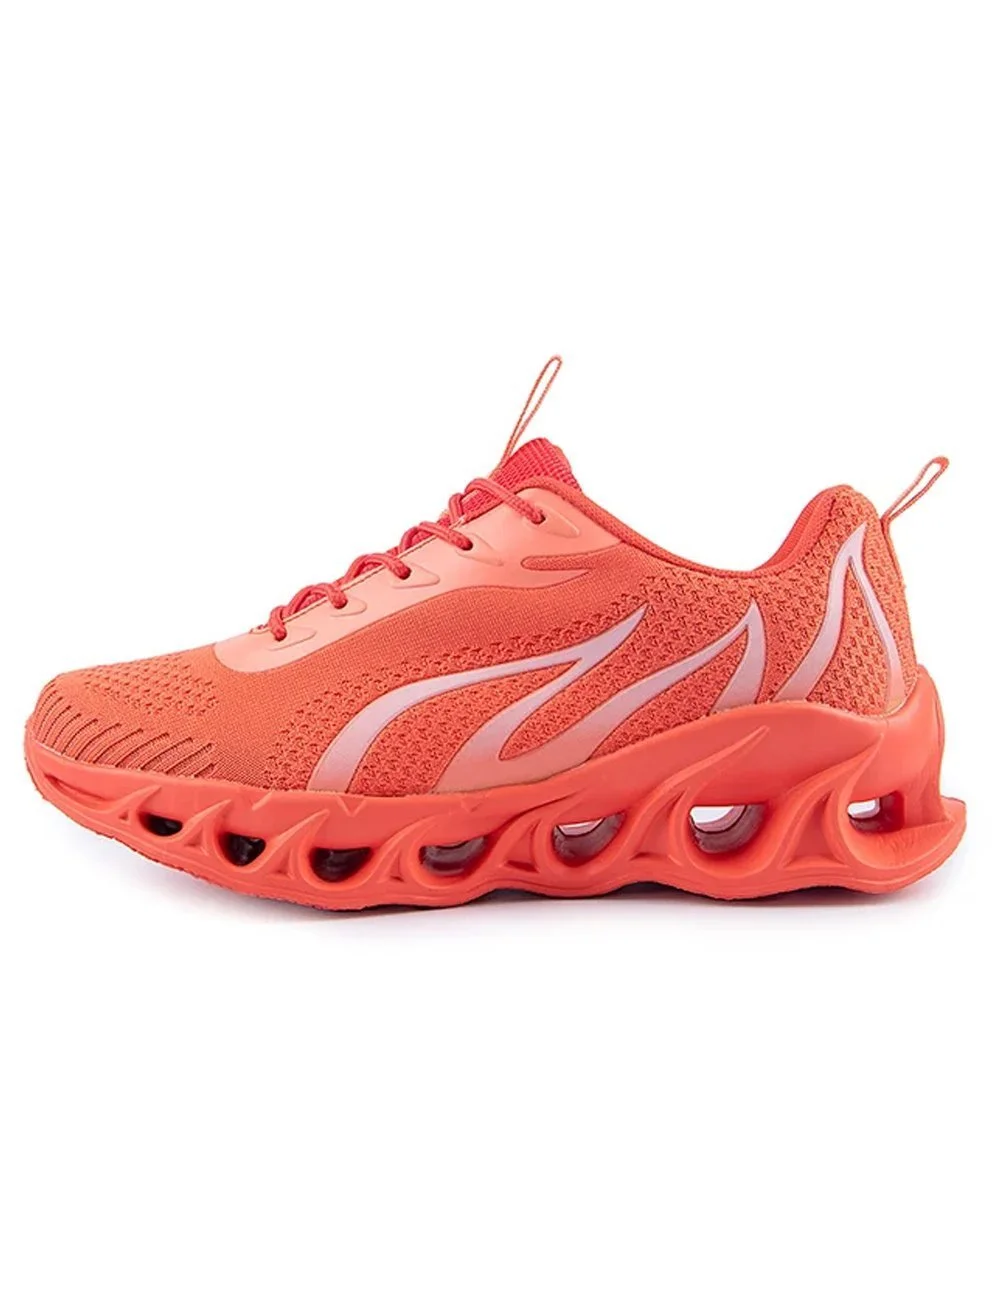 Women's Perfect Walking Shoes - Orange